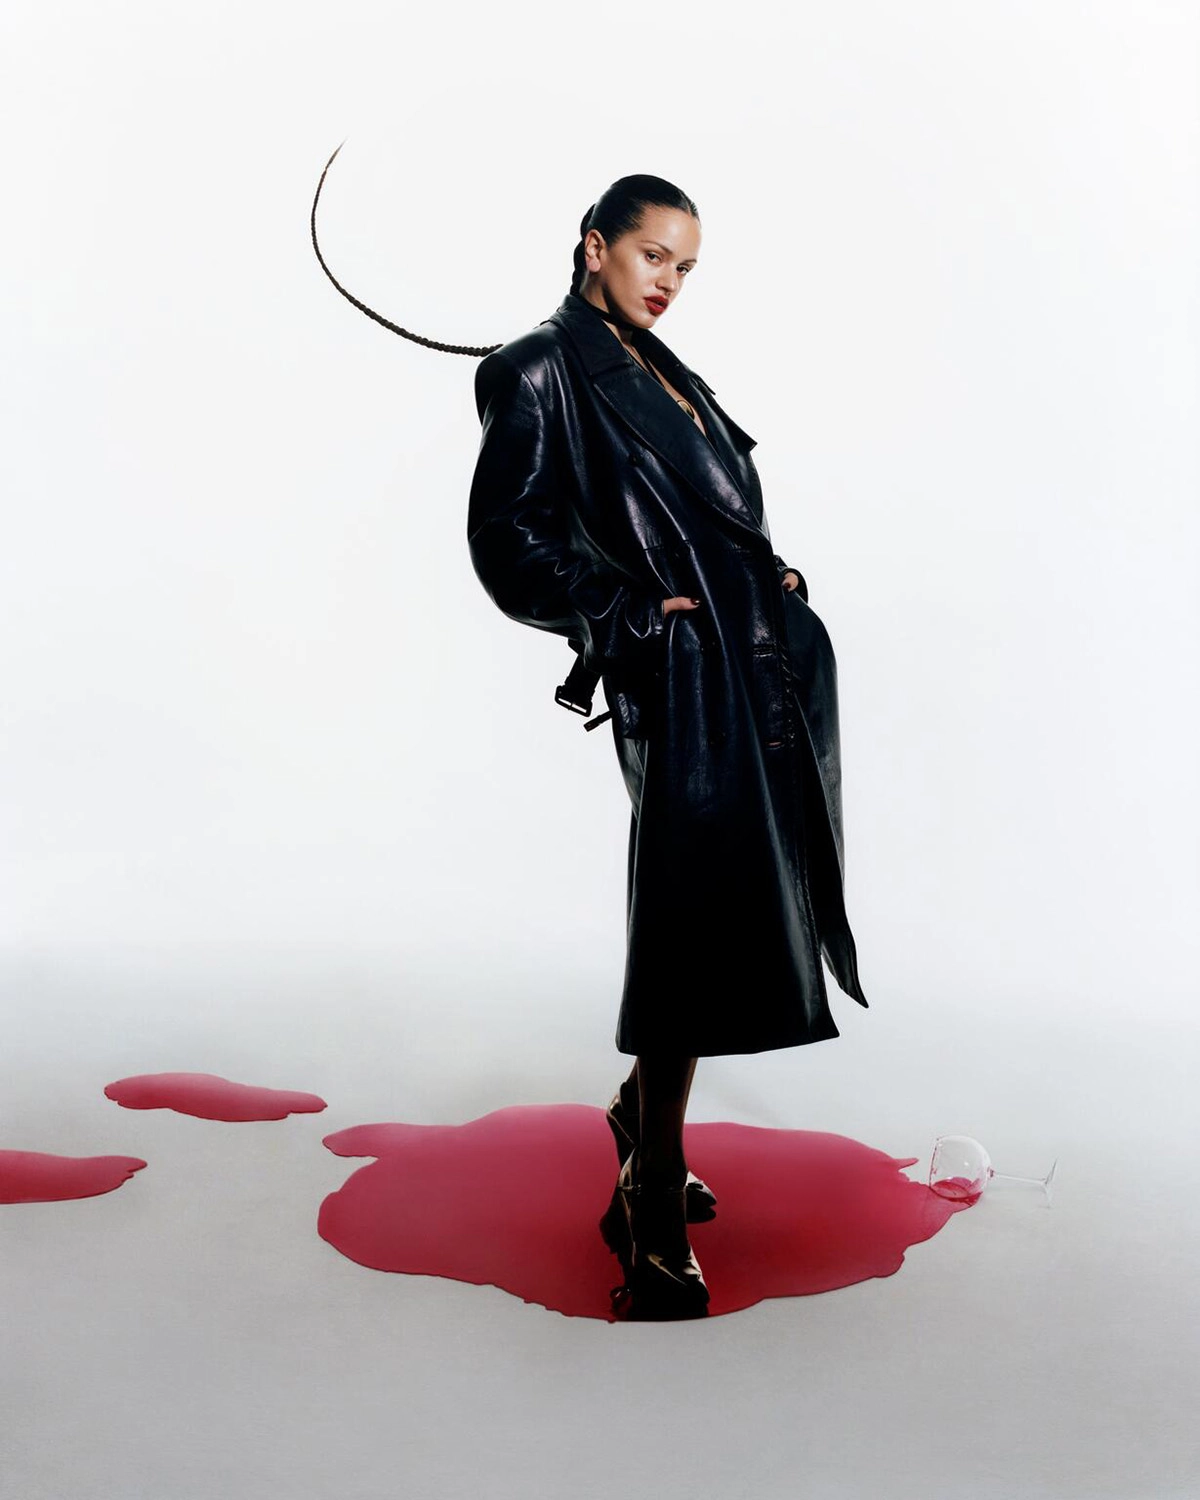 Rosalía covers Vogue Italia & Vogue Spain November 2022 by Harley Weir